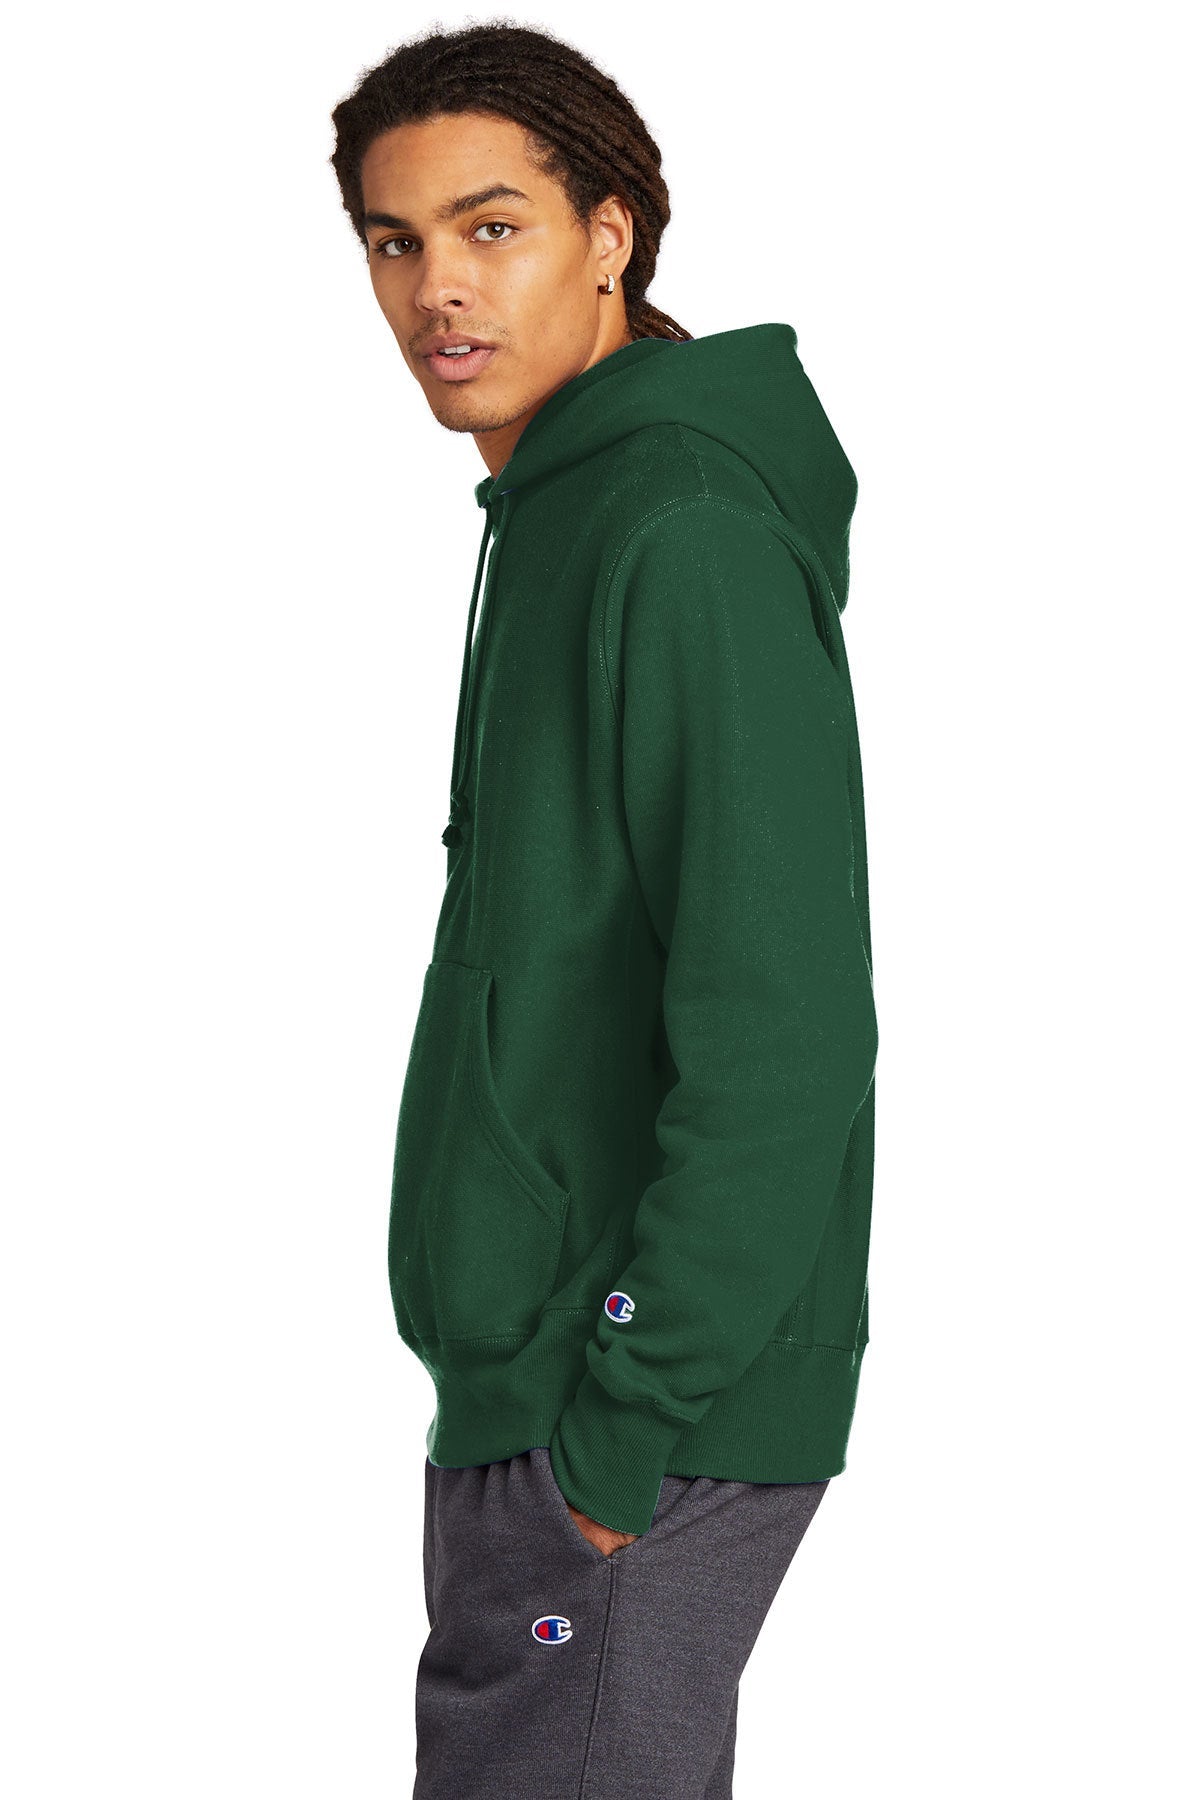 Champion Reverse Weave Hooded Sweatshirt S101 Dark Green